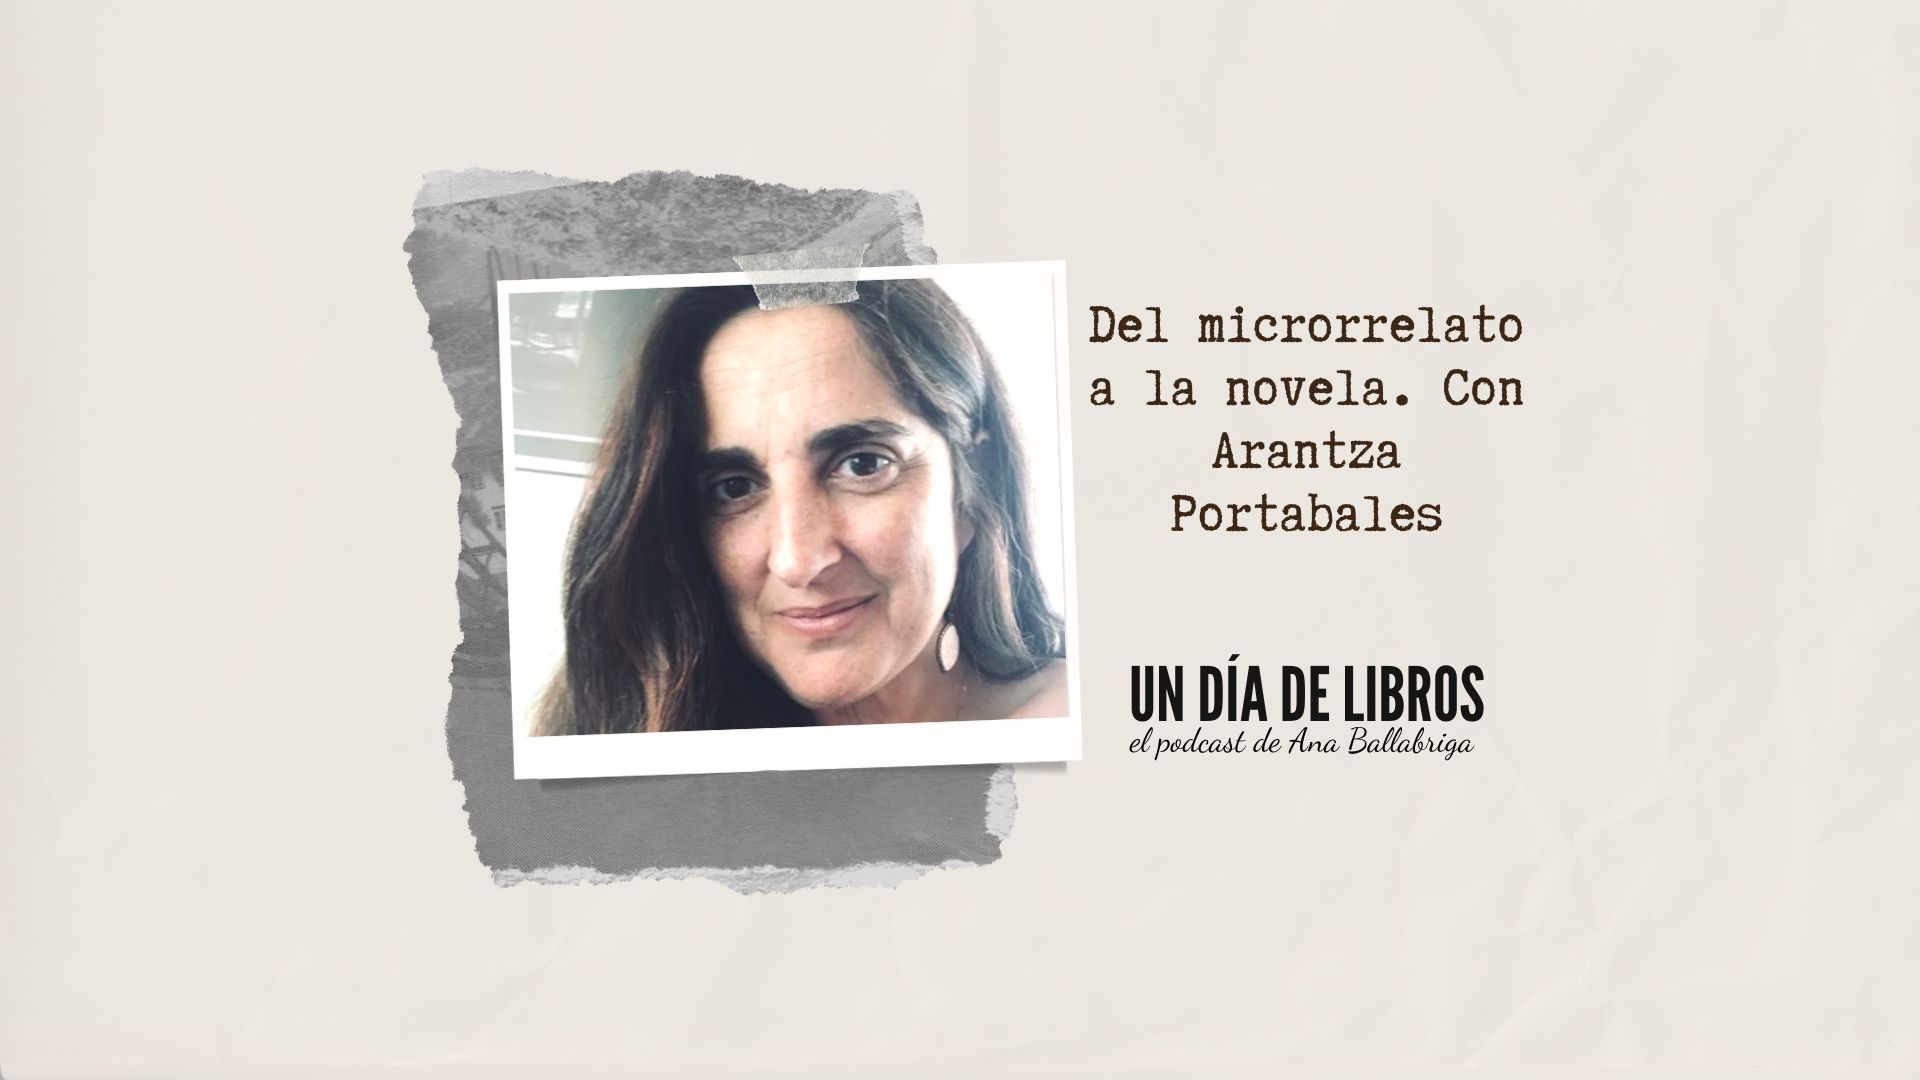 Del microrrelato a la novela, con Arantza Portabales